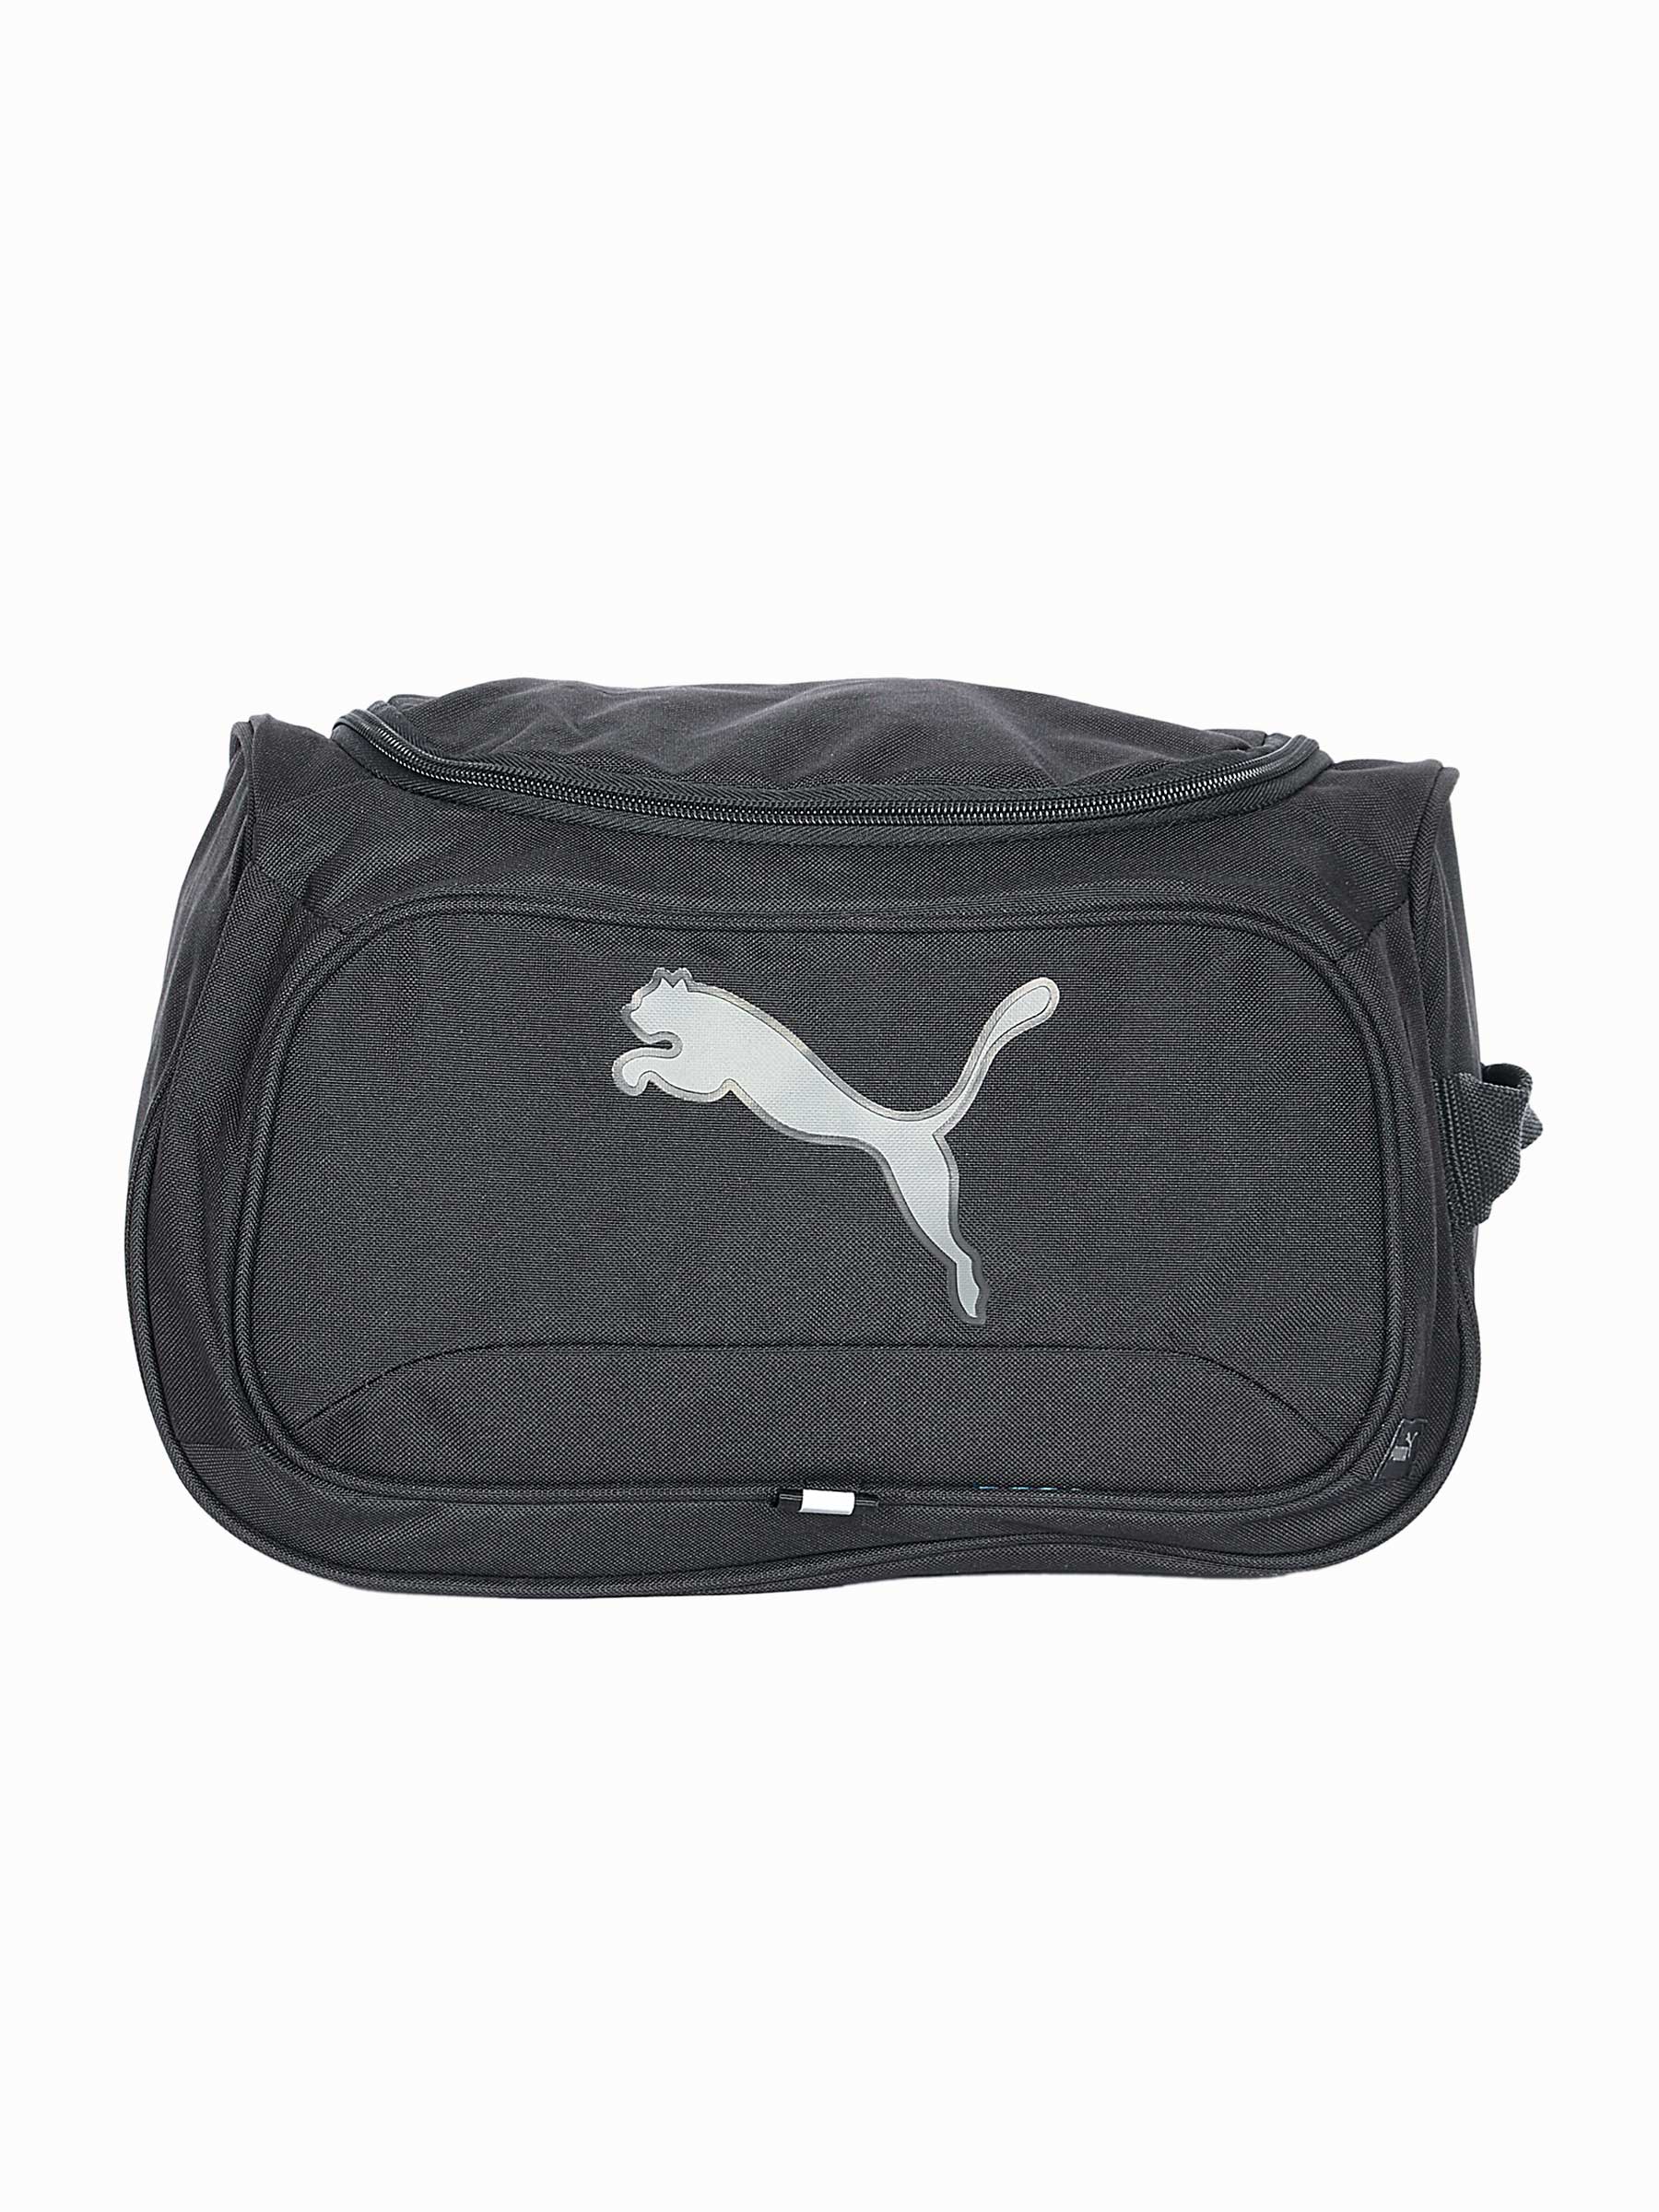 Puma Unisex Big Cat Shoe Bag Black Bags